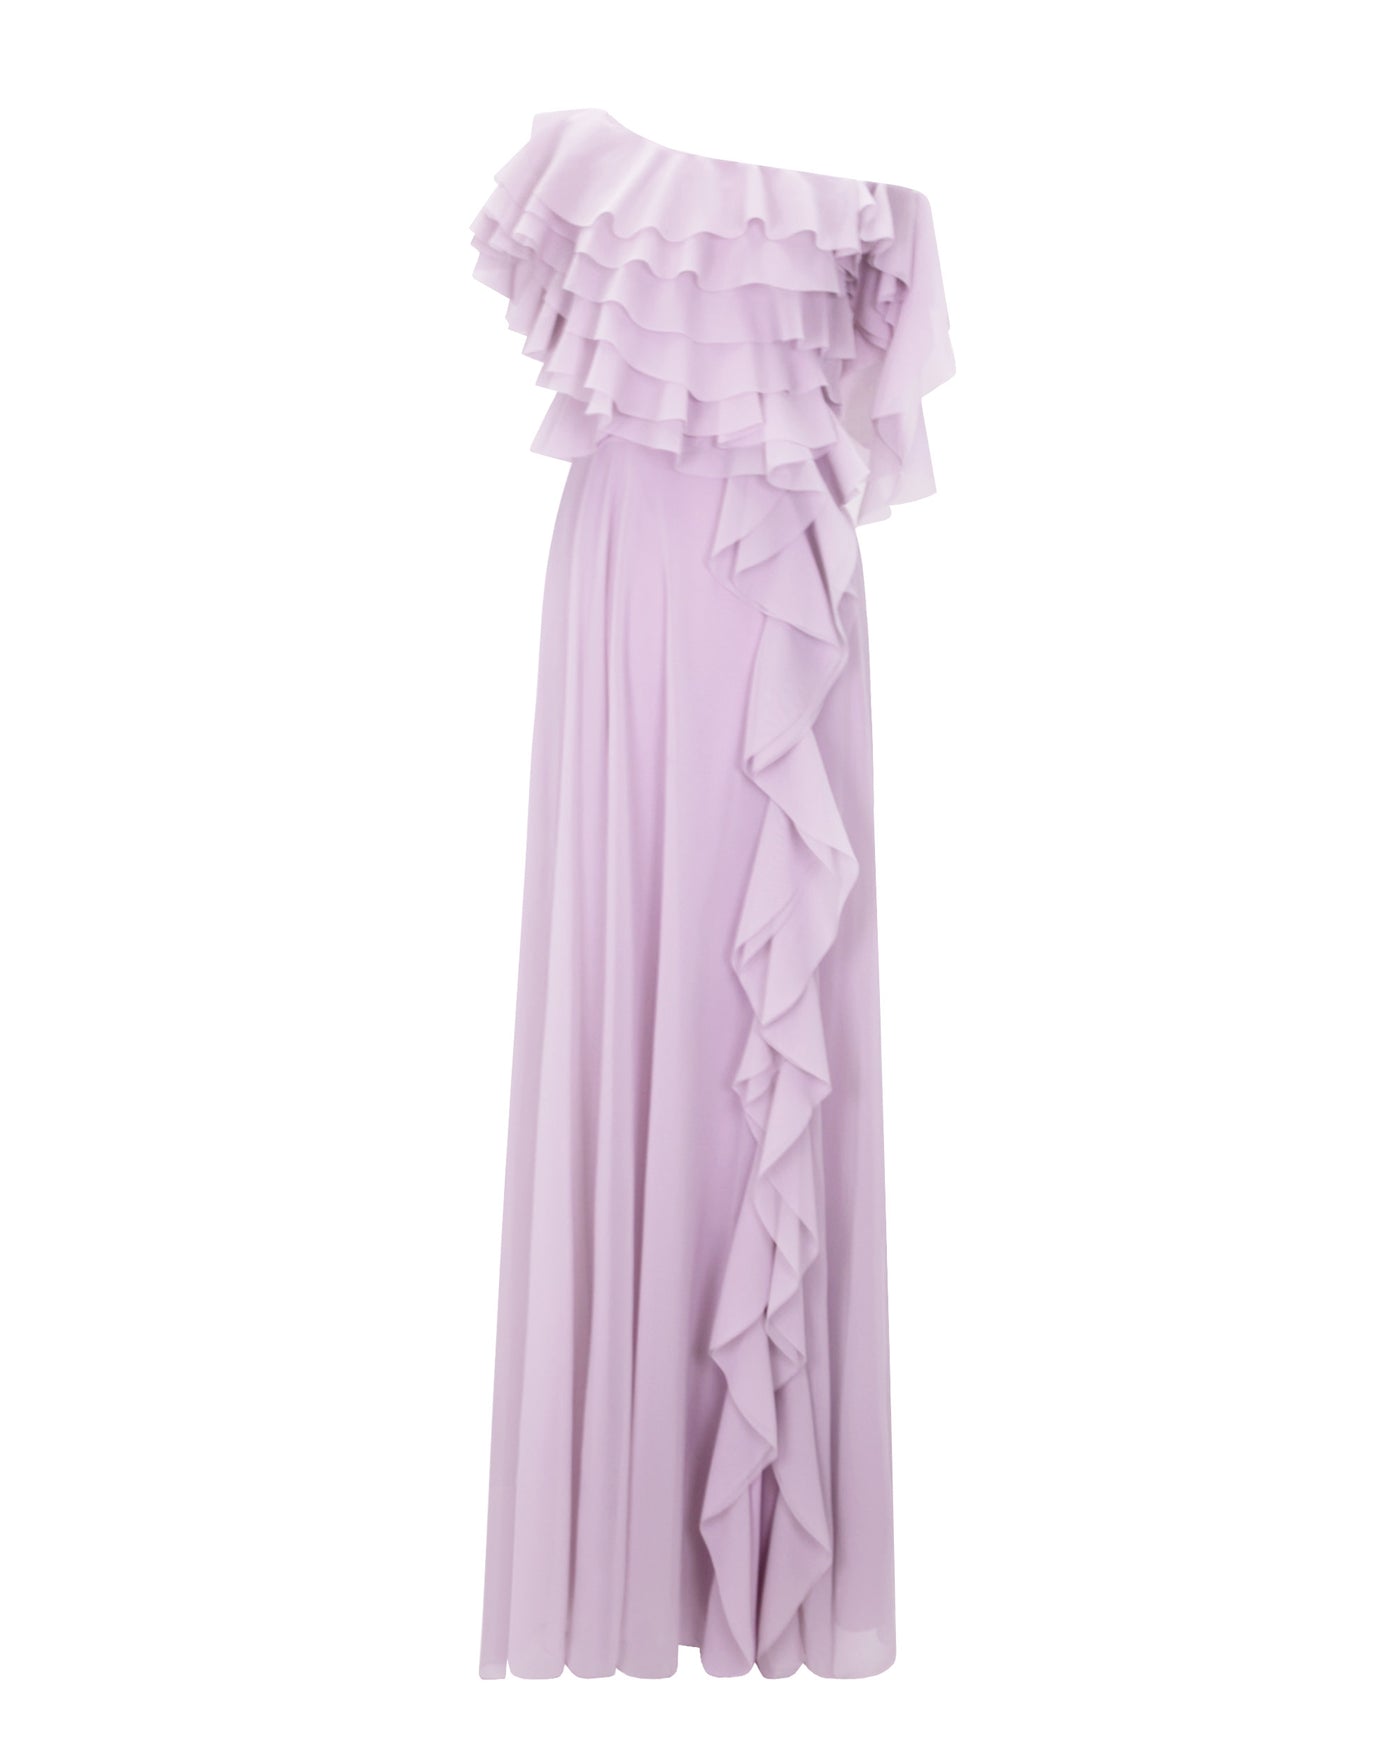 One-Shoulder Ruffled Lilac Dress